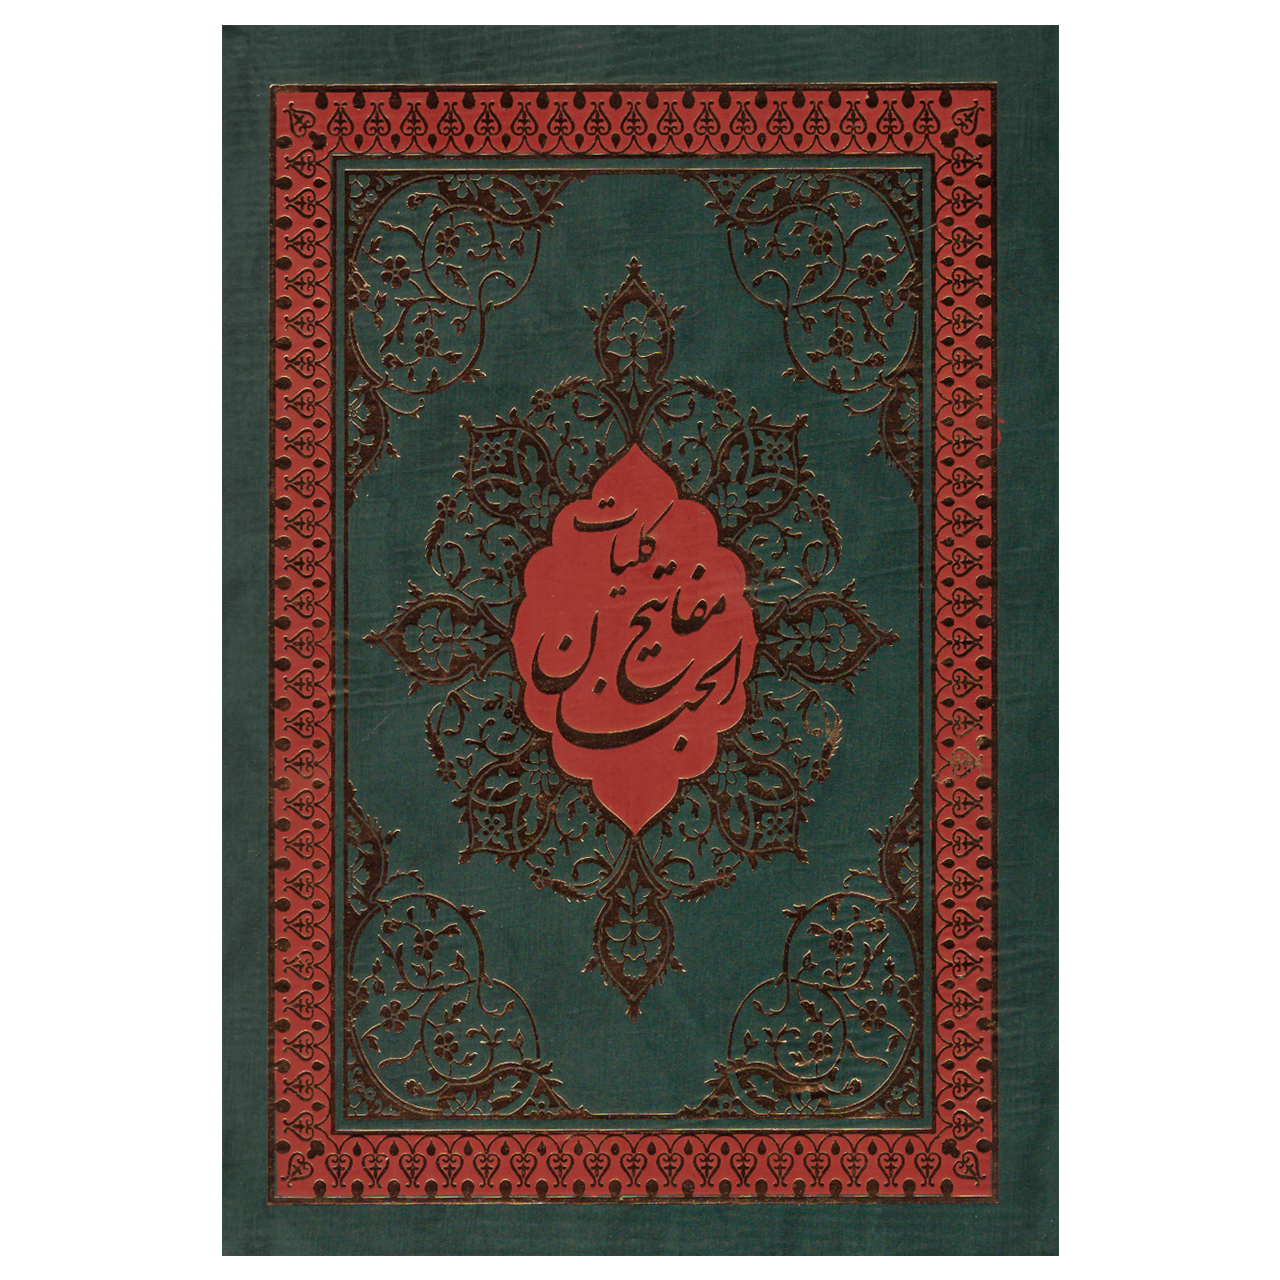 کتاب کلیات مفاتیح الجنان اثر شیخ عباس قمی انتشارت پیام آزادی